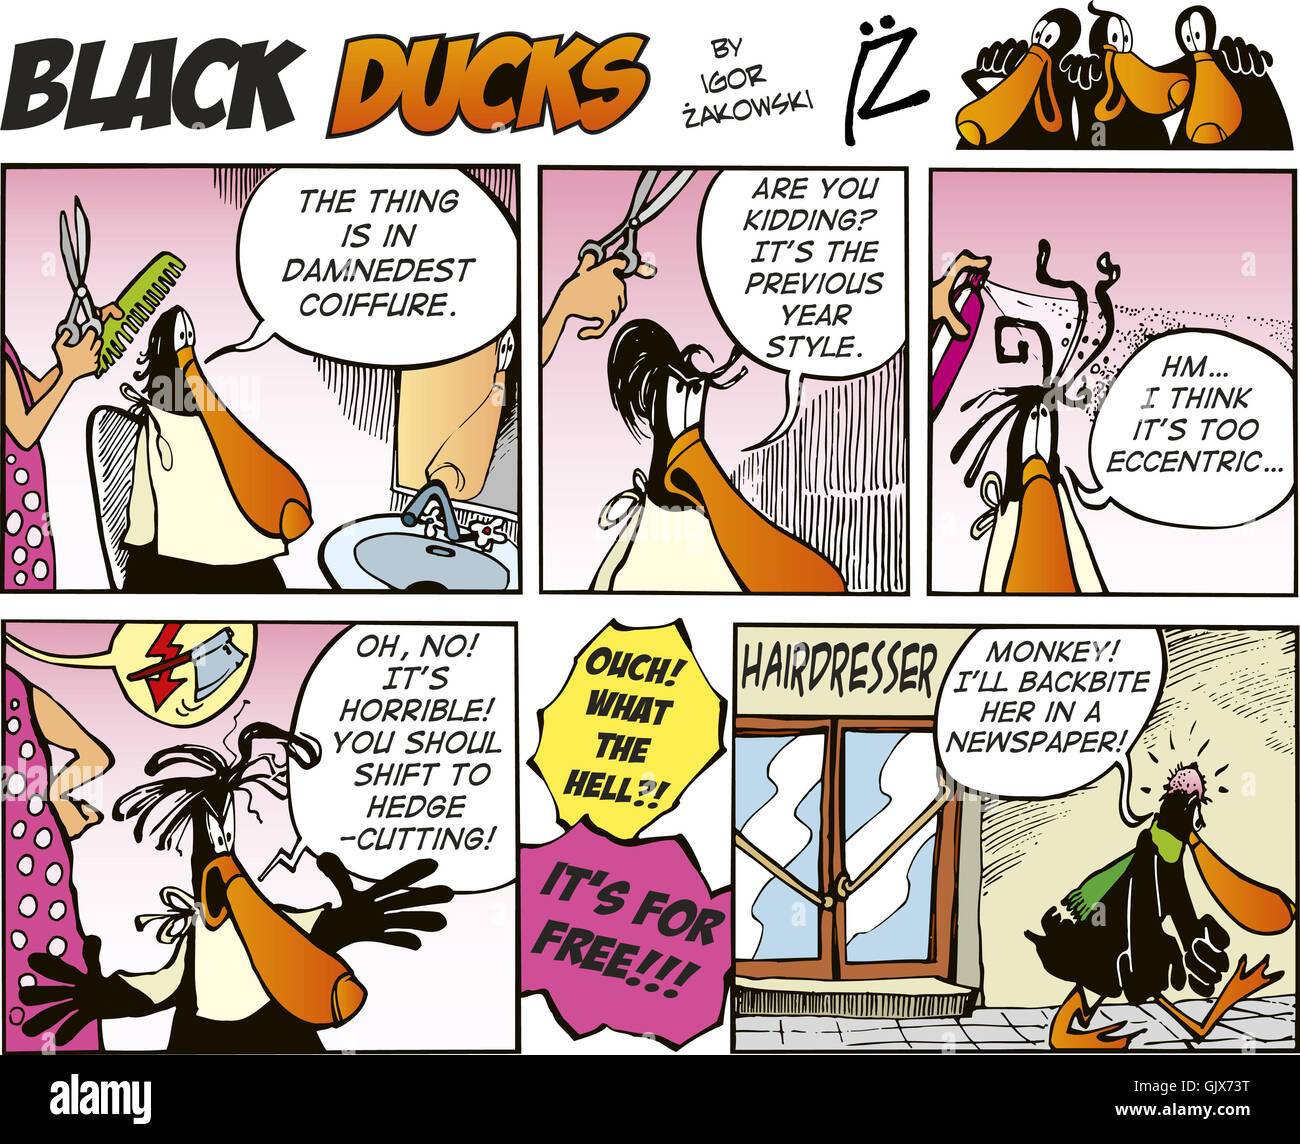 Black Ducks Comics episode 9 Stock Photo